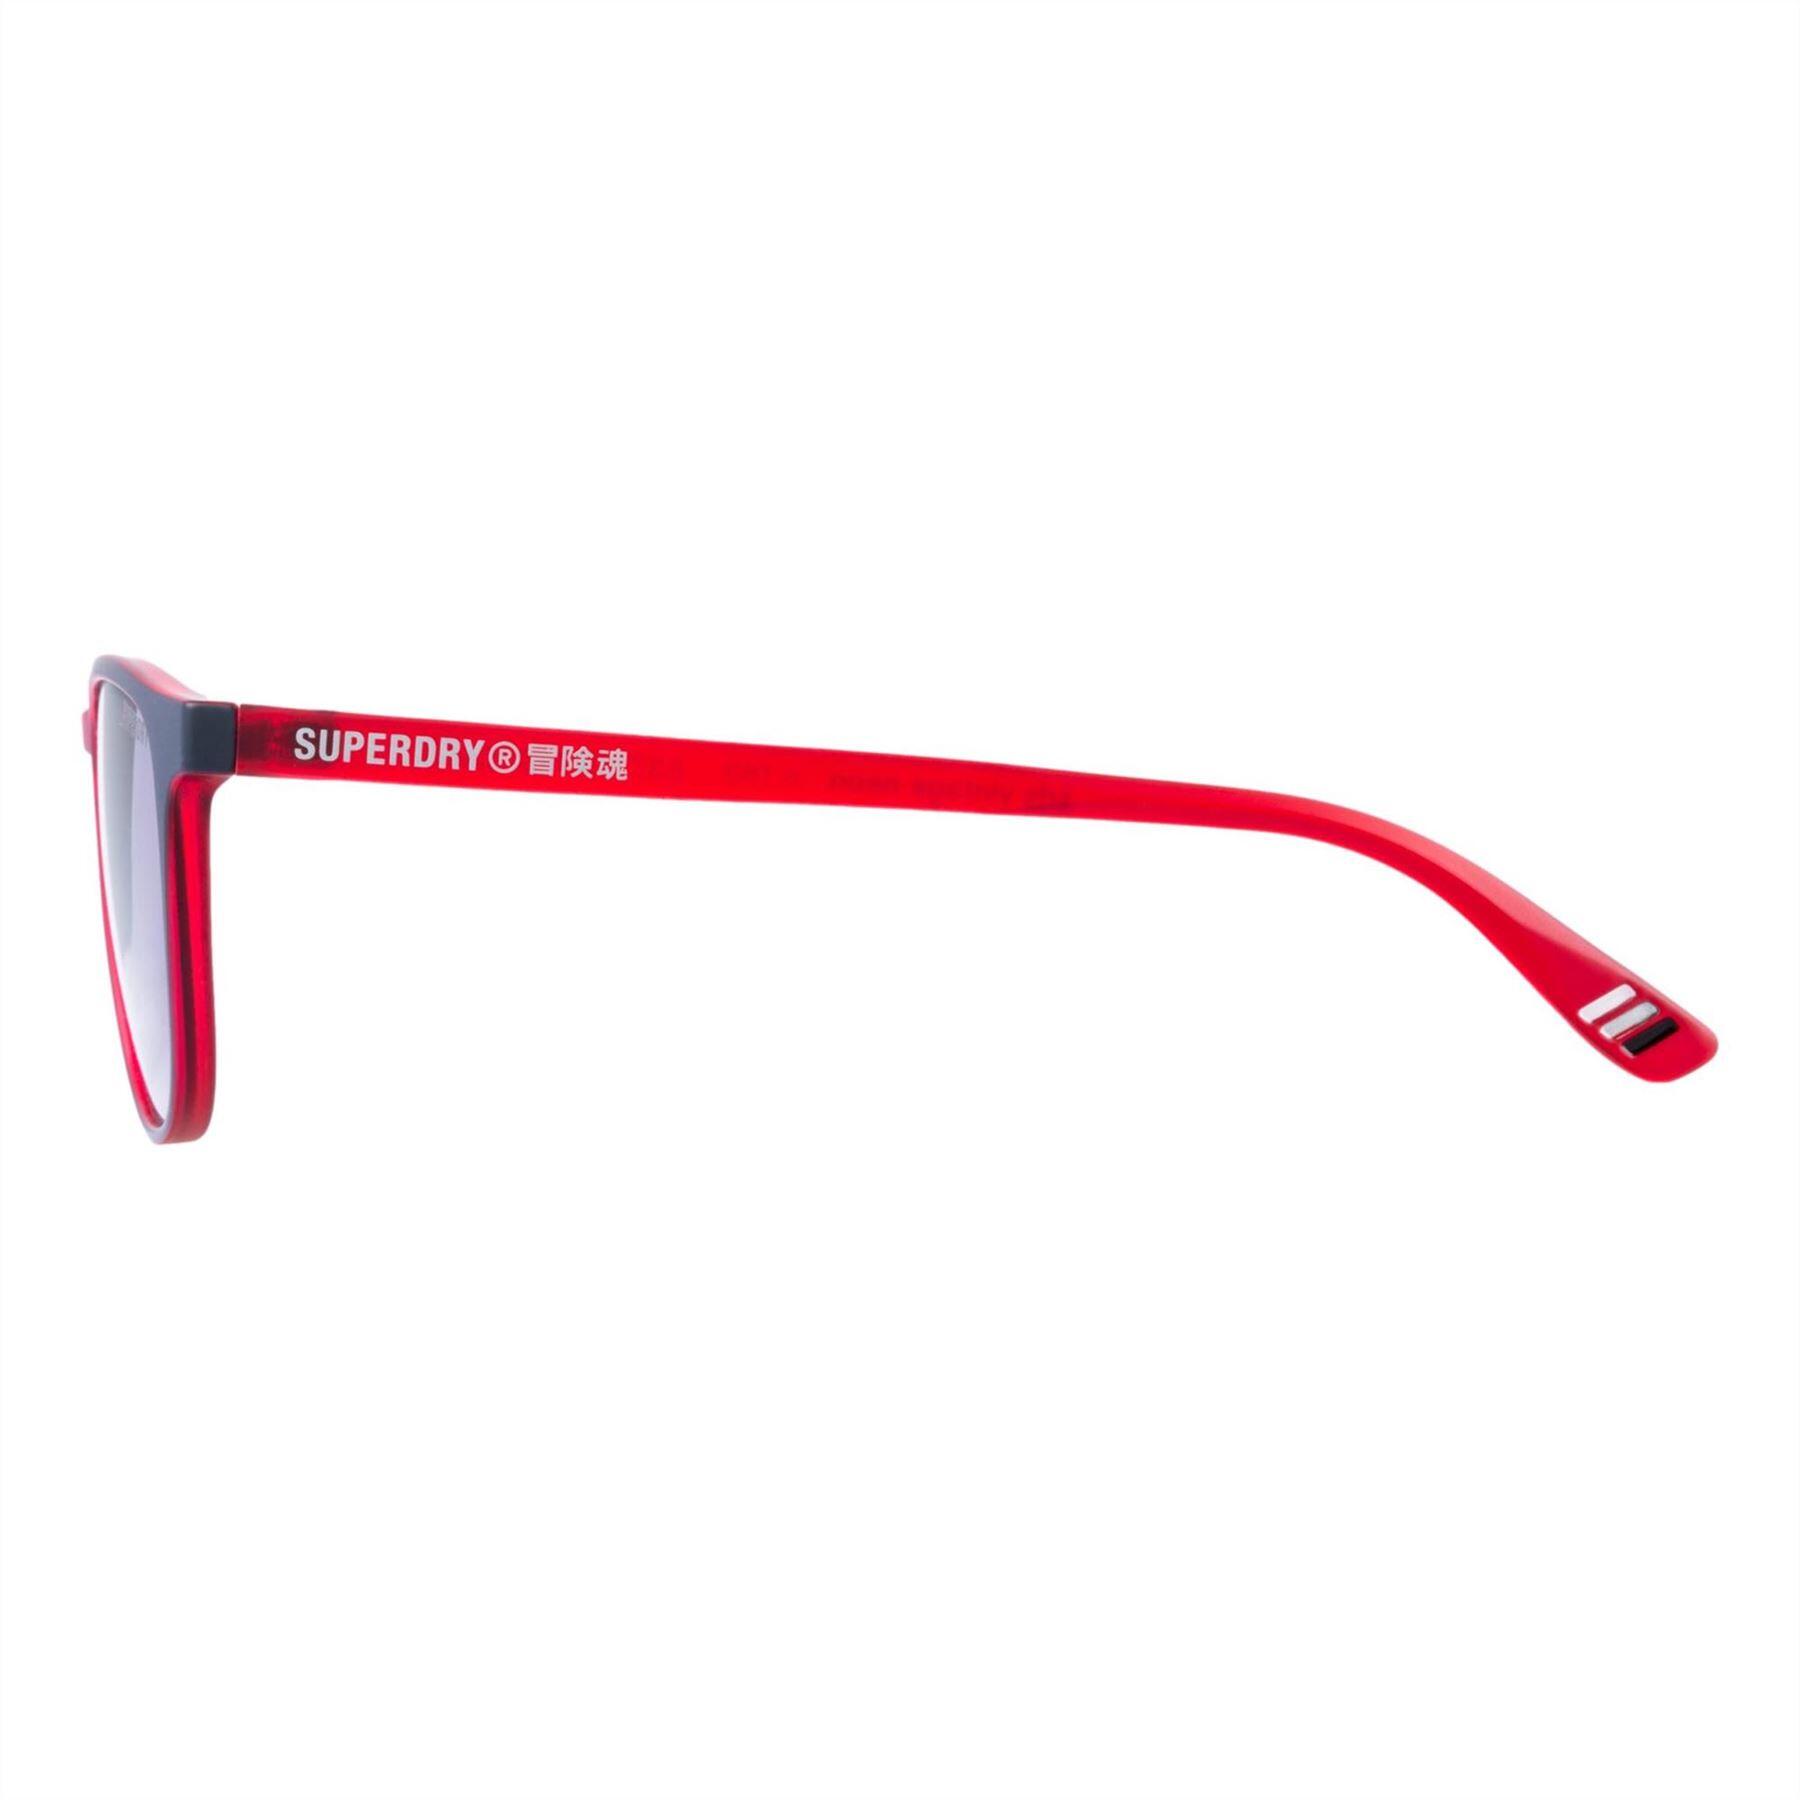 SUPERDRY Superdry Vintage Neon Sunglasses - Navy / Red